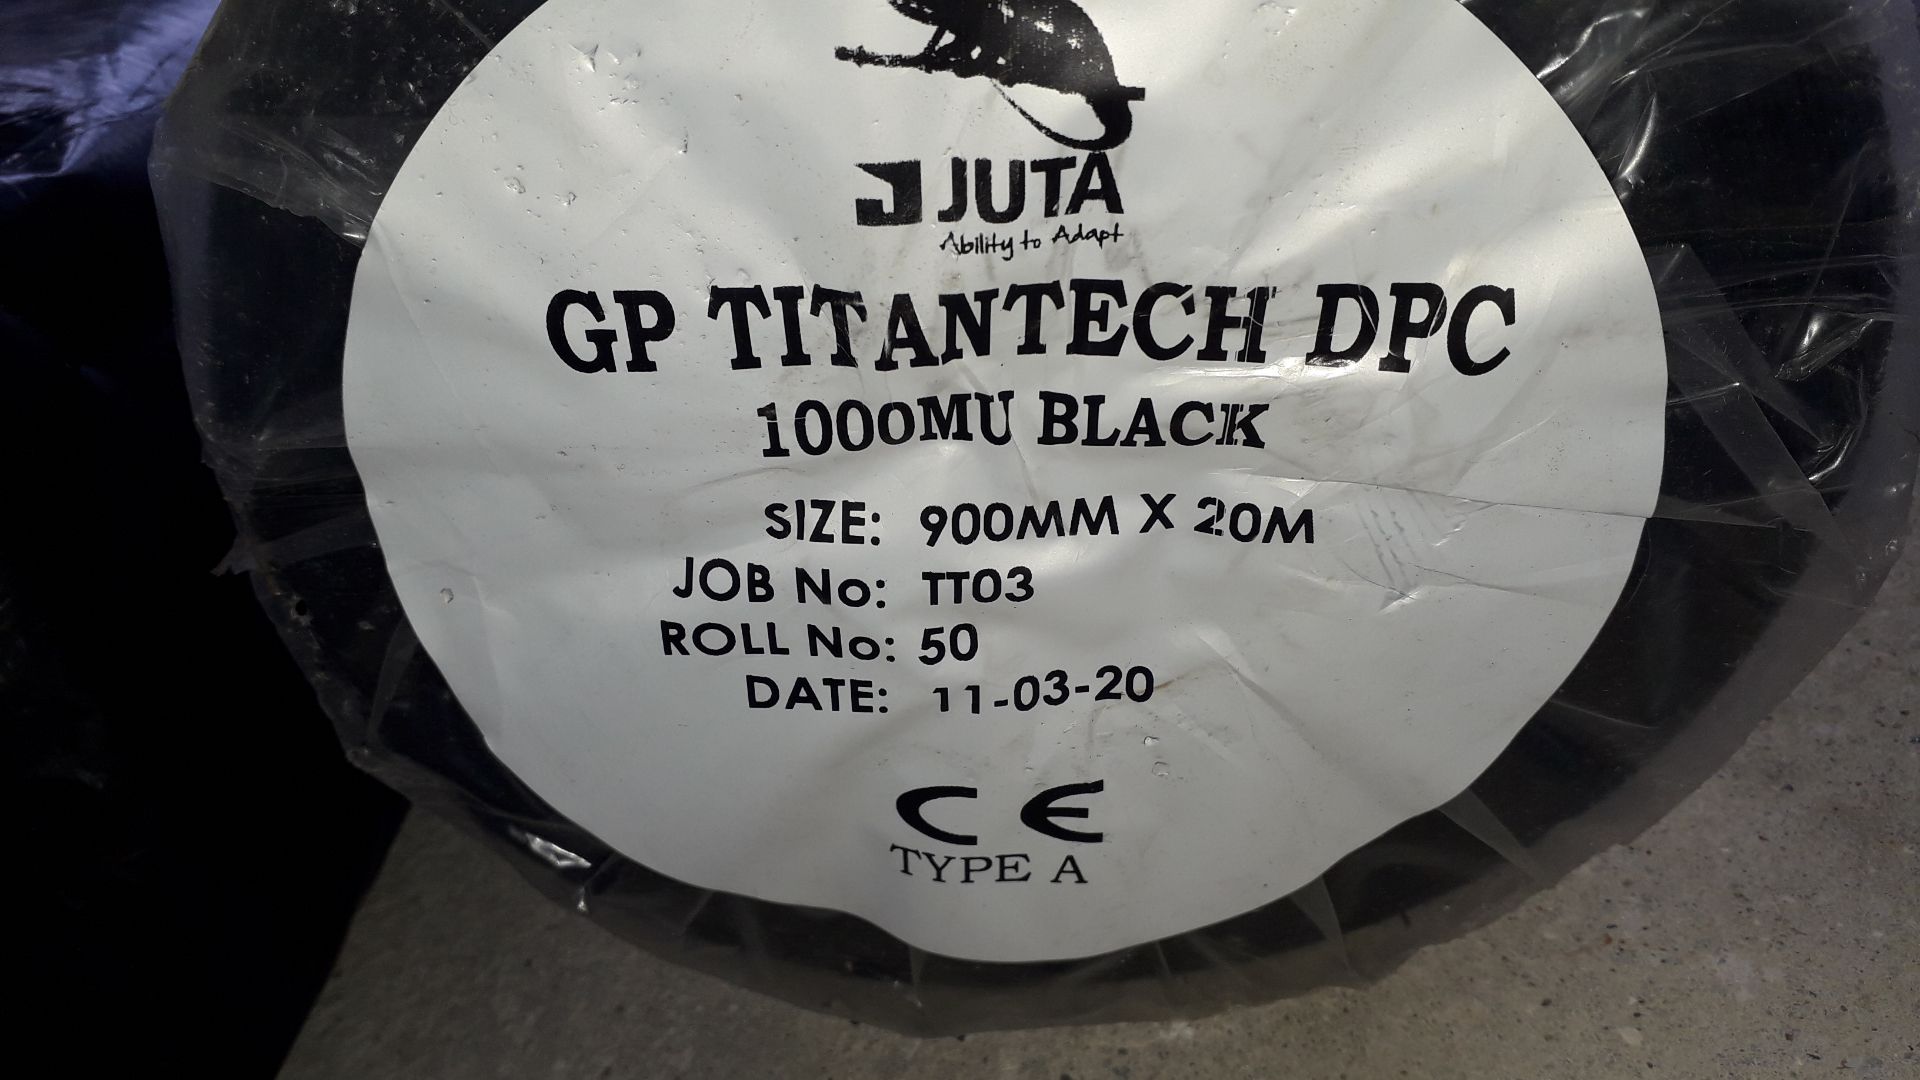 2x rolls of GP 7 Titantech DPC 100mm black & 1 roll of Visqueen gas resistant roll - Image 2 of 3